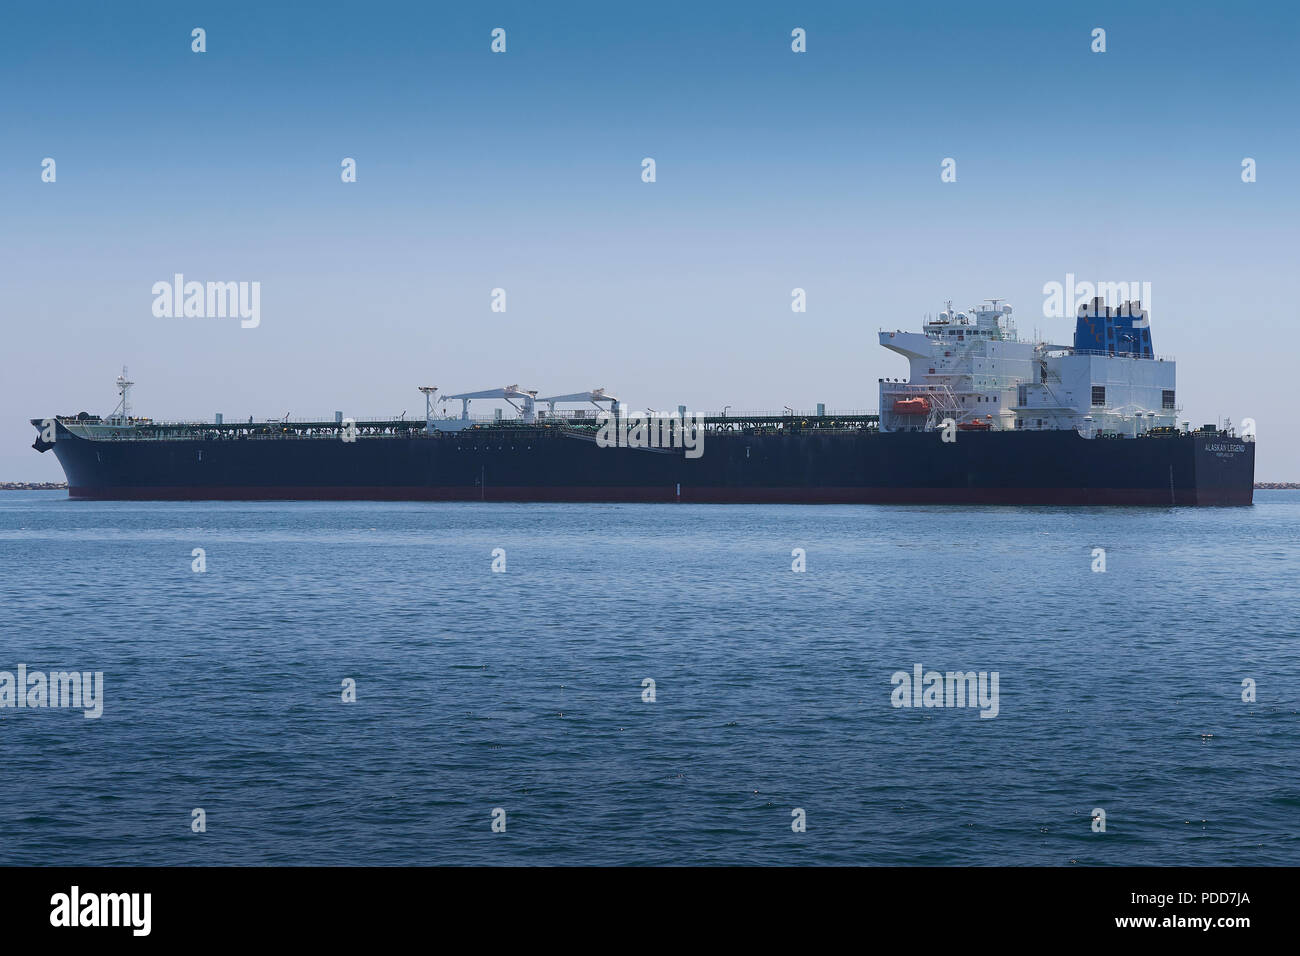 Giant Supertanker (Crude Oil Tanker), ALASKAN LEGEND, At Anchor In The Port Of Long Beach, California, USA. Stock Photo